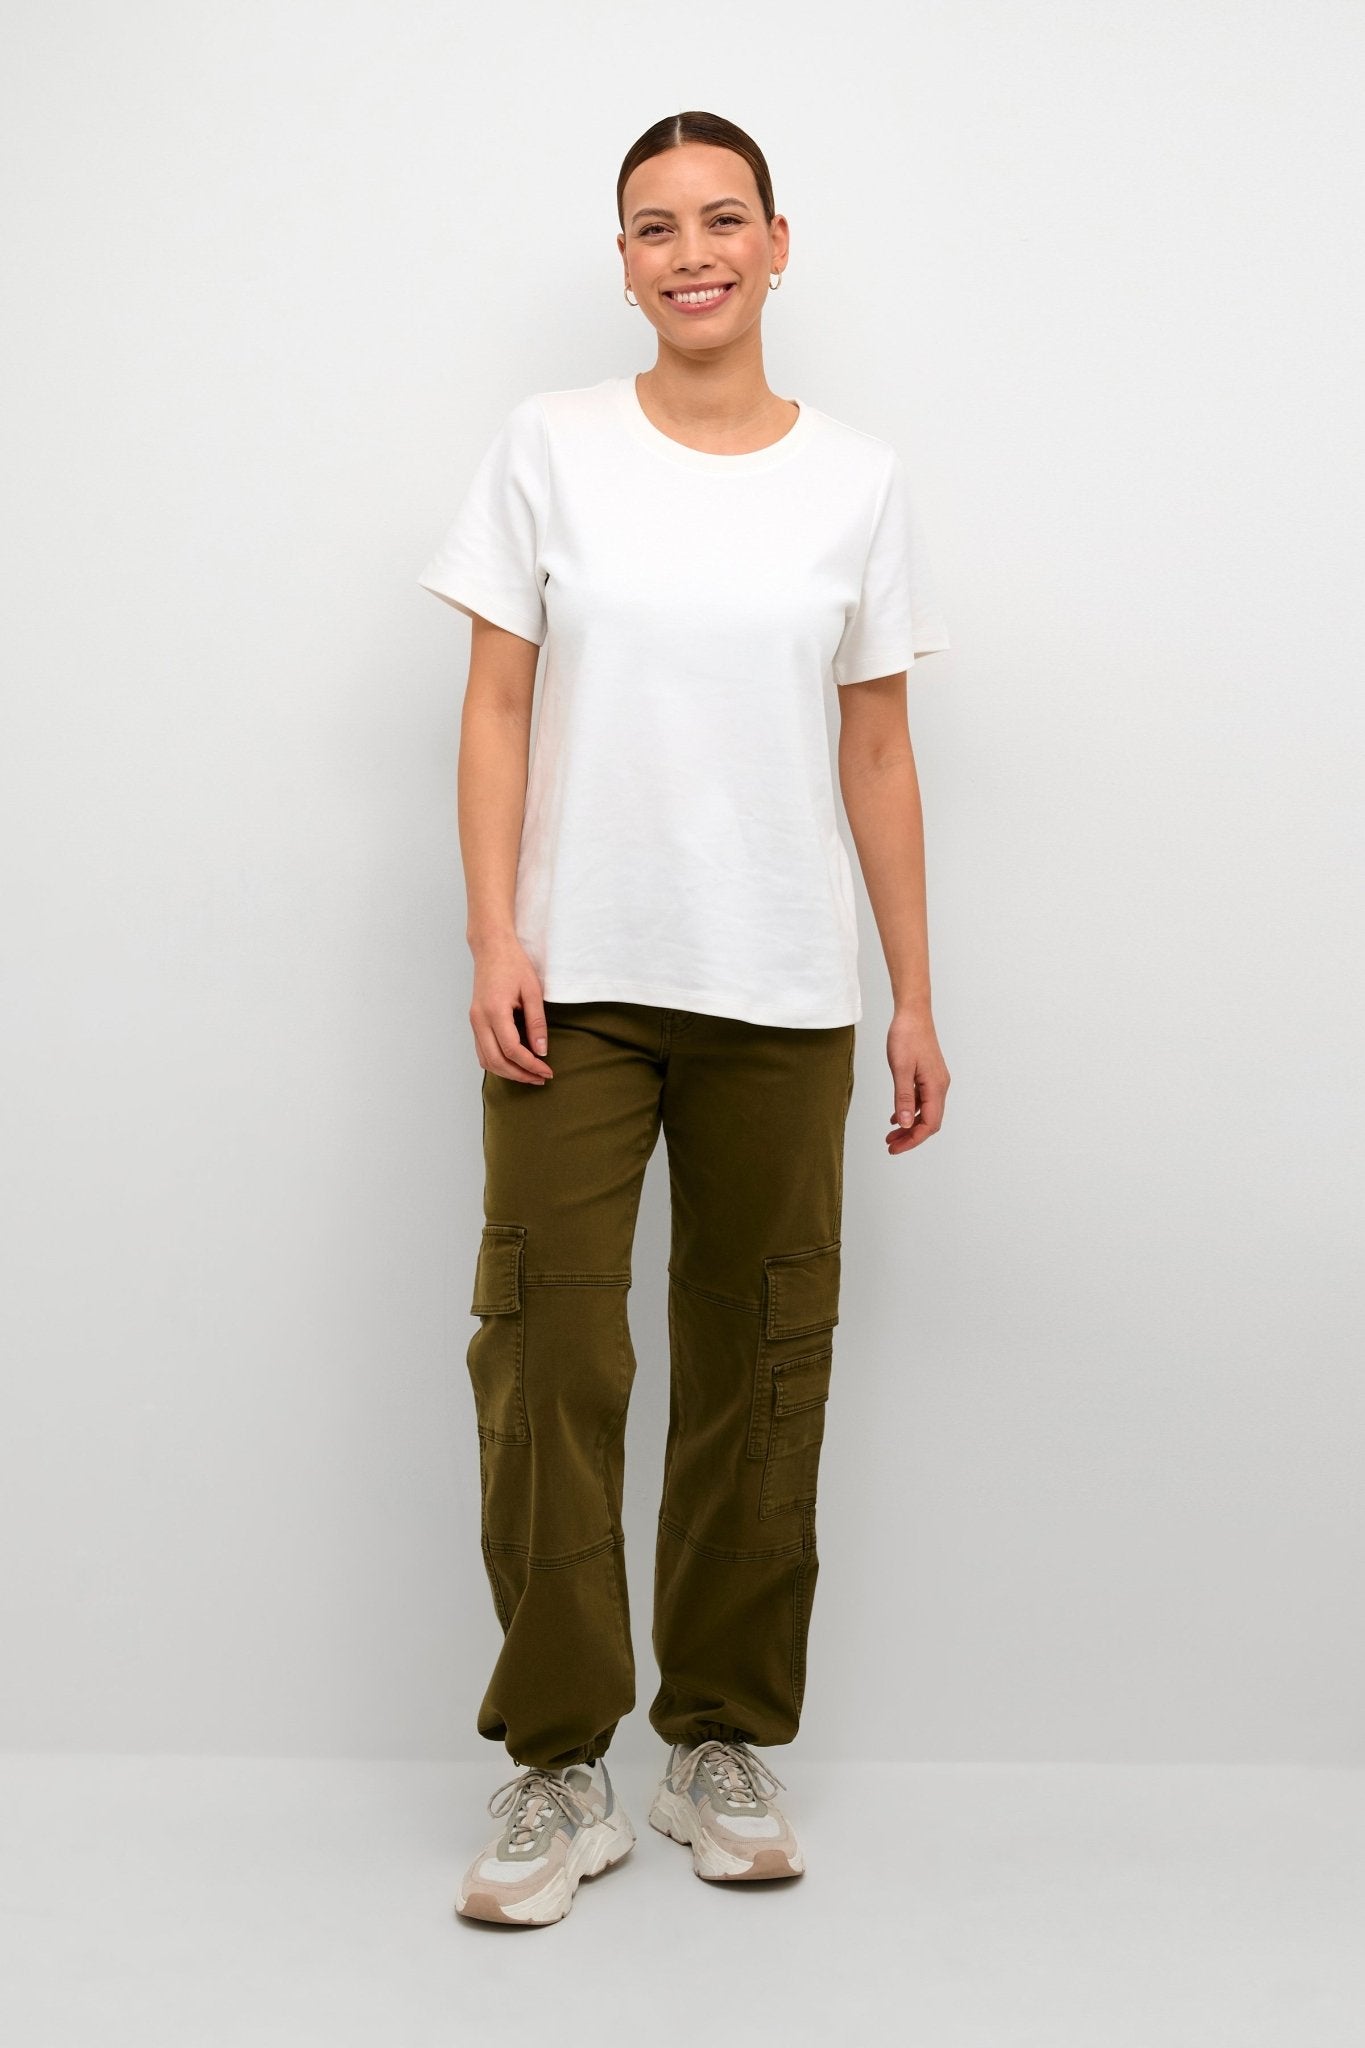 Beth Plain T-shirt by Culure - gardenia white - Blue Sky Fashions & Lingerie